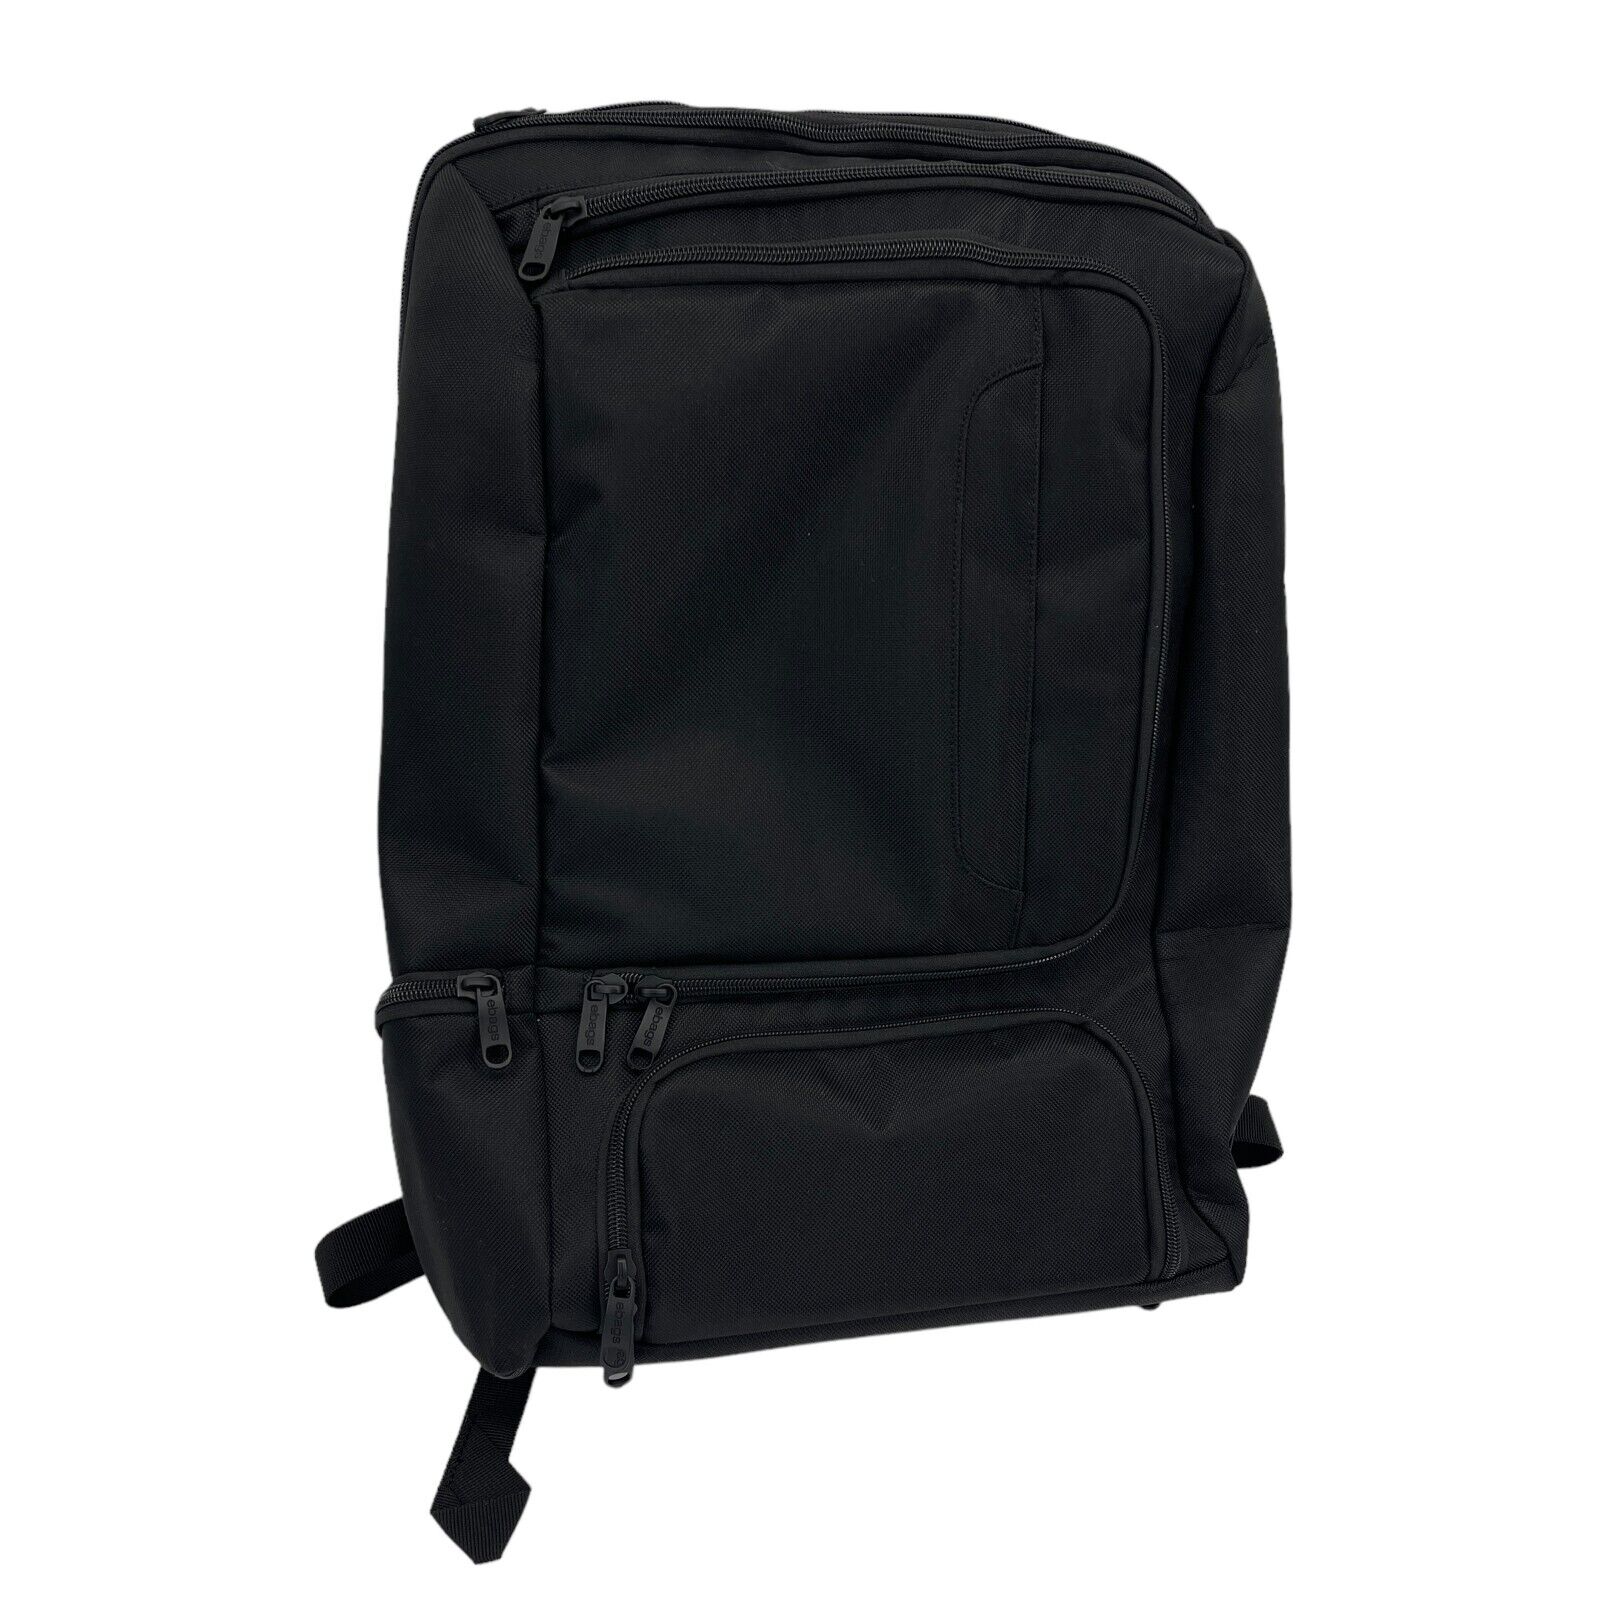 eBags New Pro Slim Weekender Convertible Luggage Travel Bag Black EB214620.5